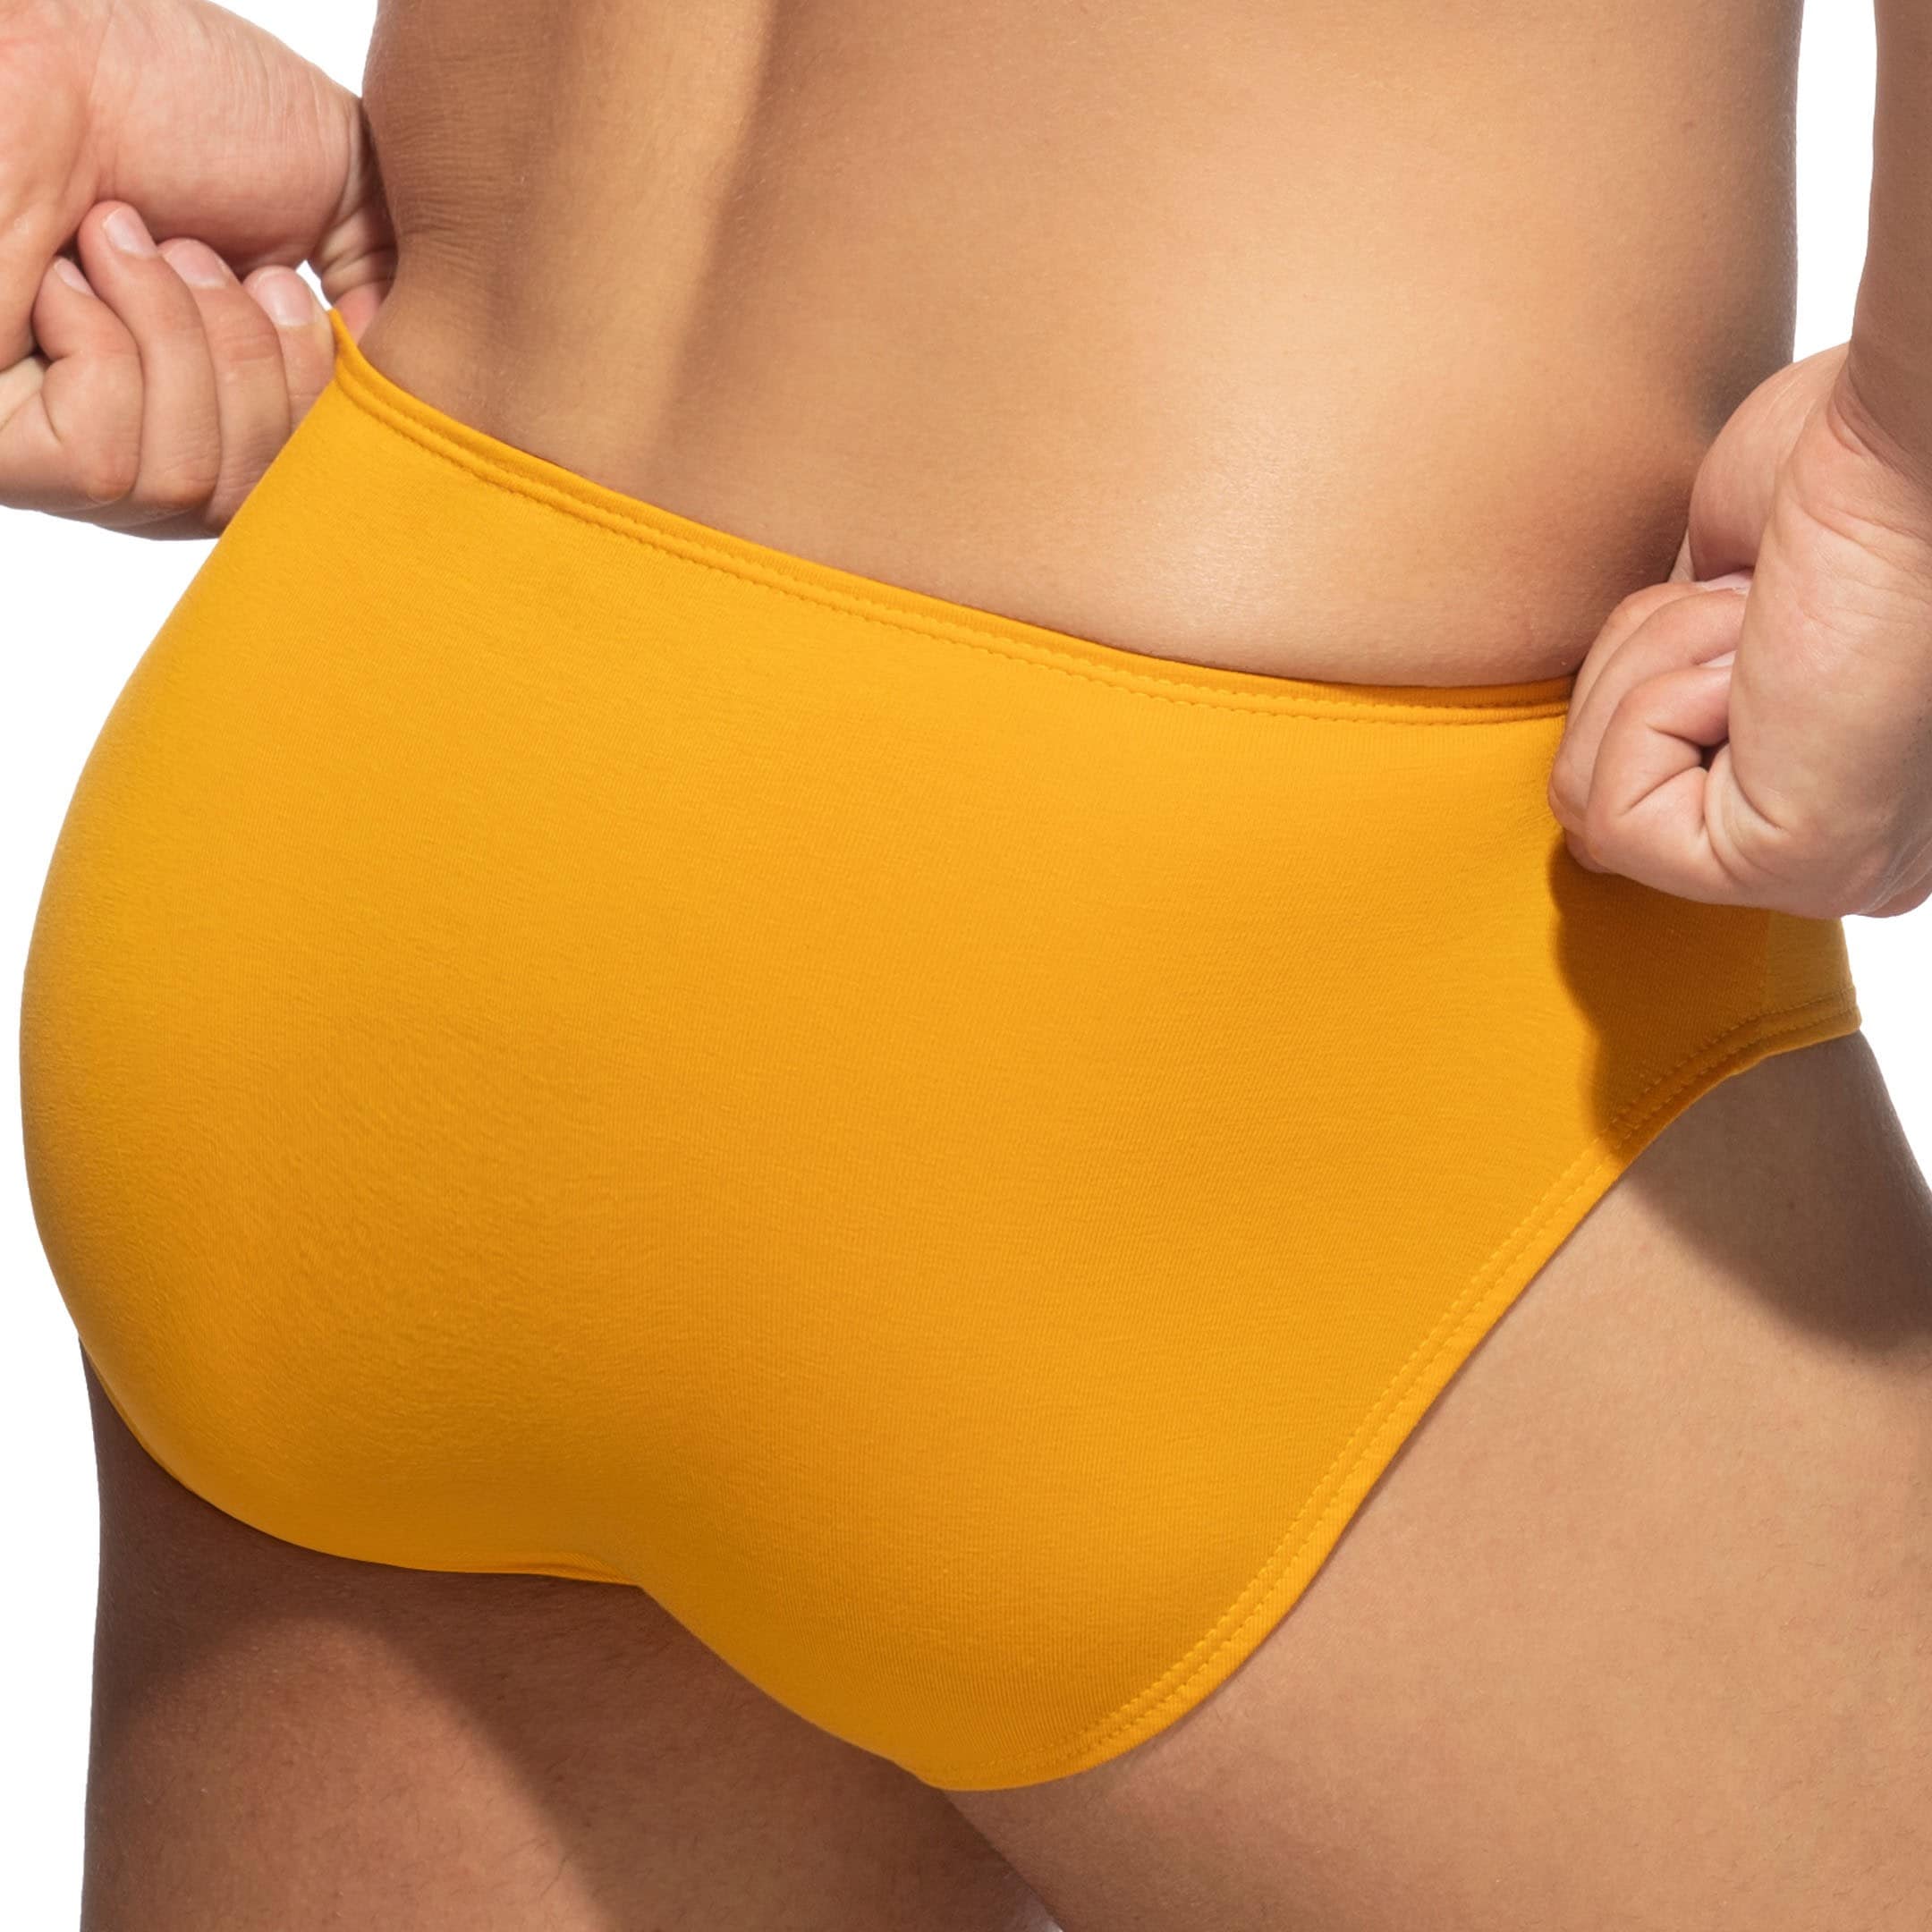 Mustard Yellow Women's Underpants, Comfortable Organic Cotton Jersey Lounge  Panties, Elastic Free Underwear Boyleg and Brief Style 